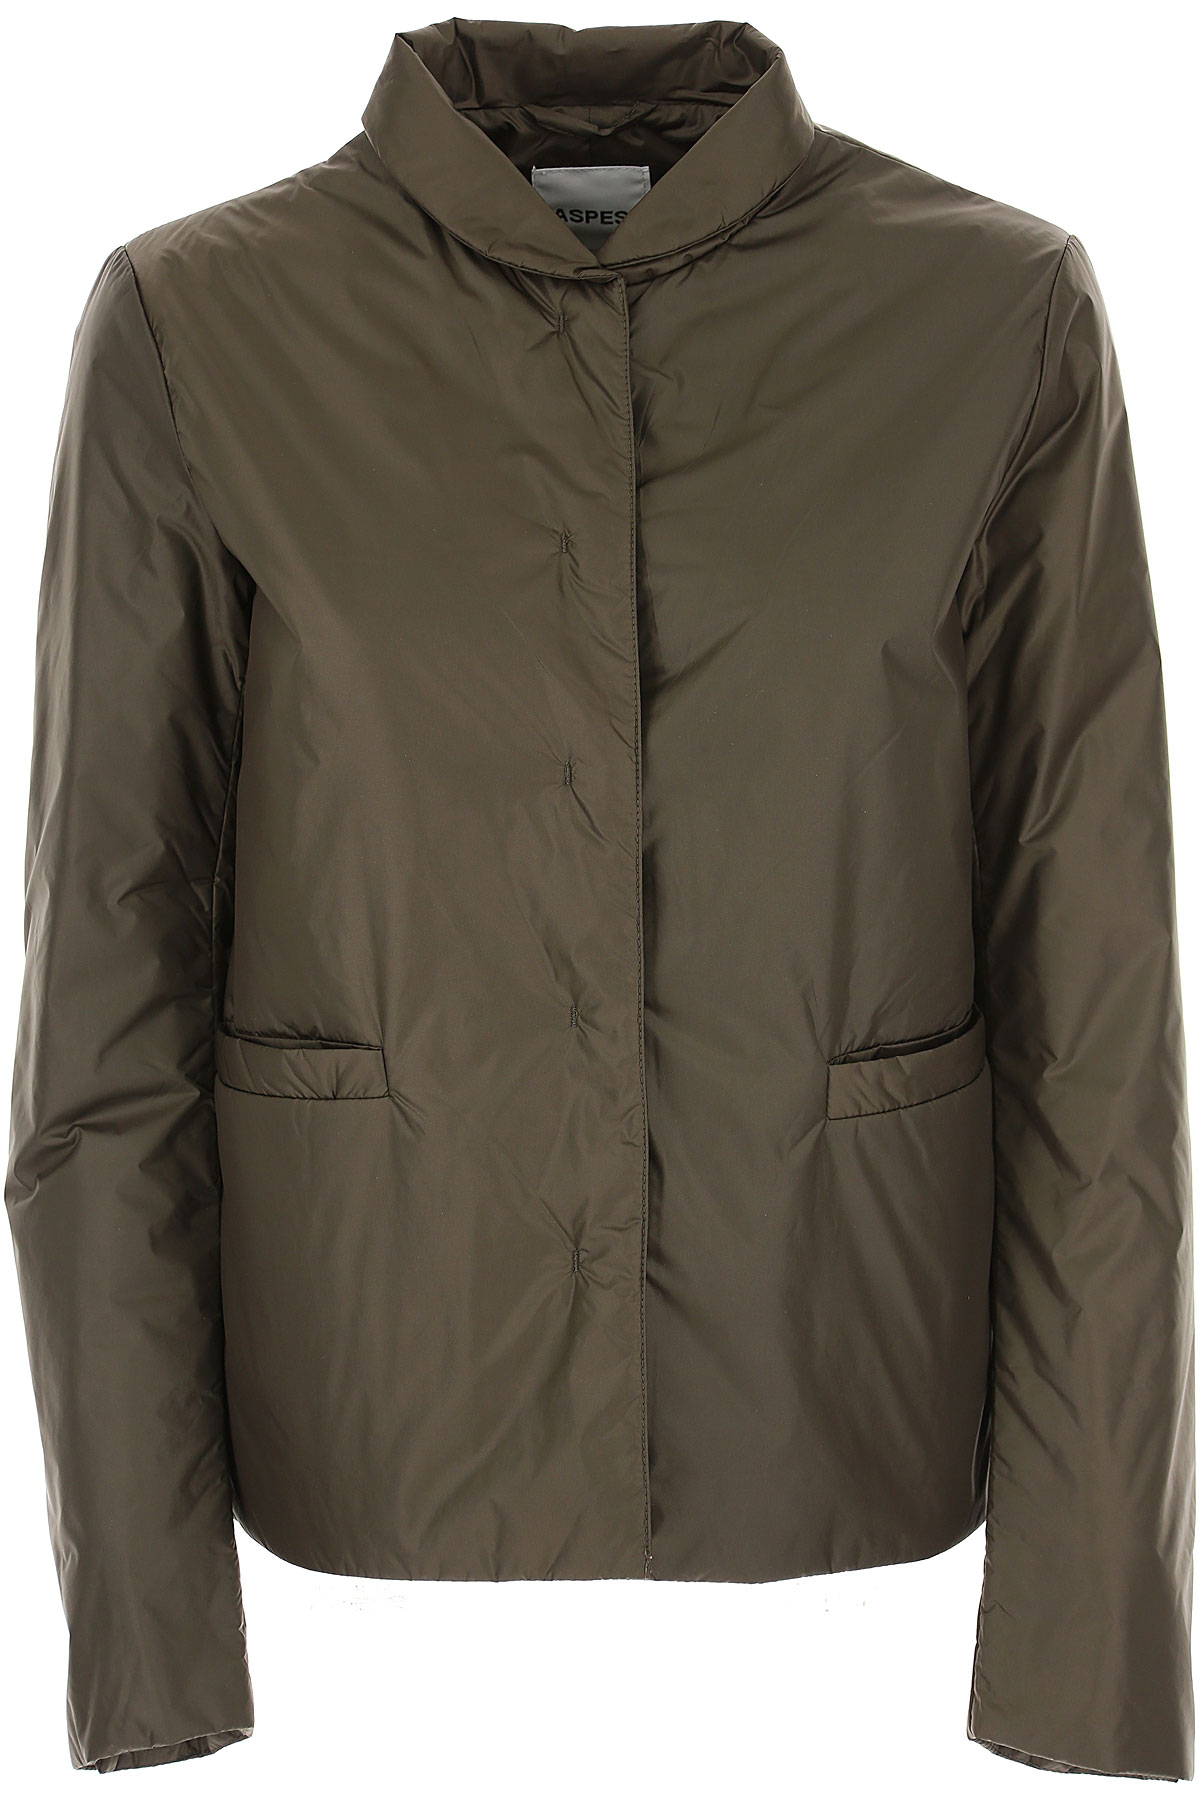 Aspesi Jacke für Damen Günstig im Sale, Dunkel Militärgrün, Polyester, 2017, 40 44 46 M